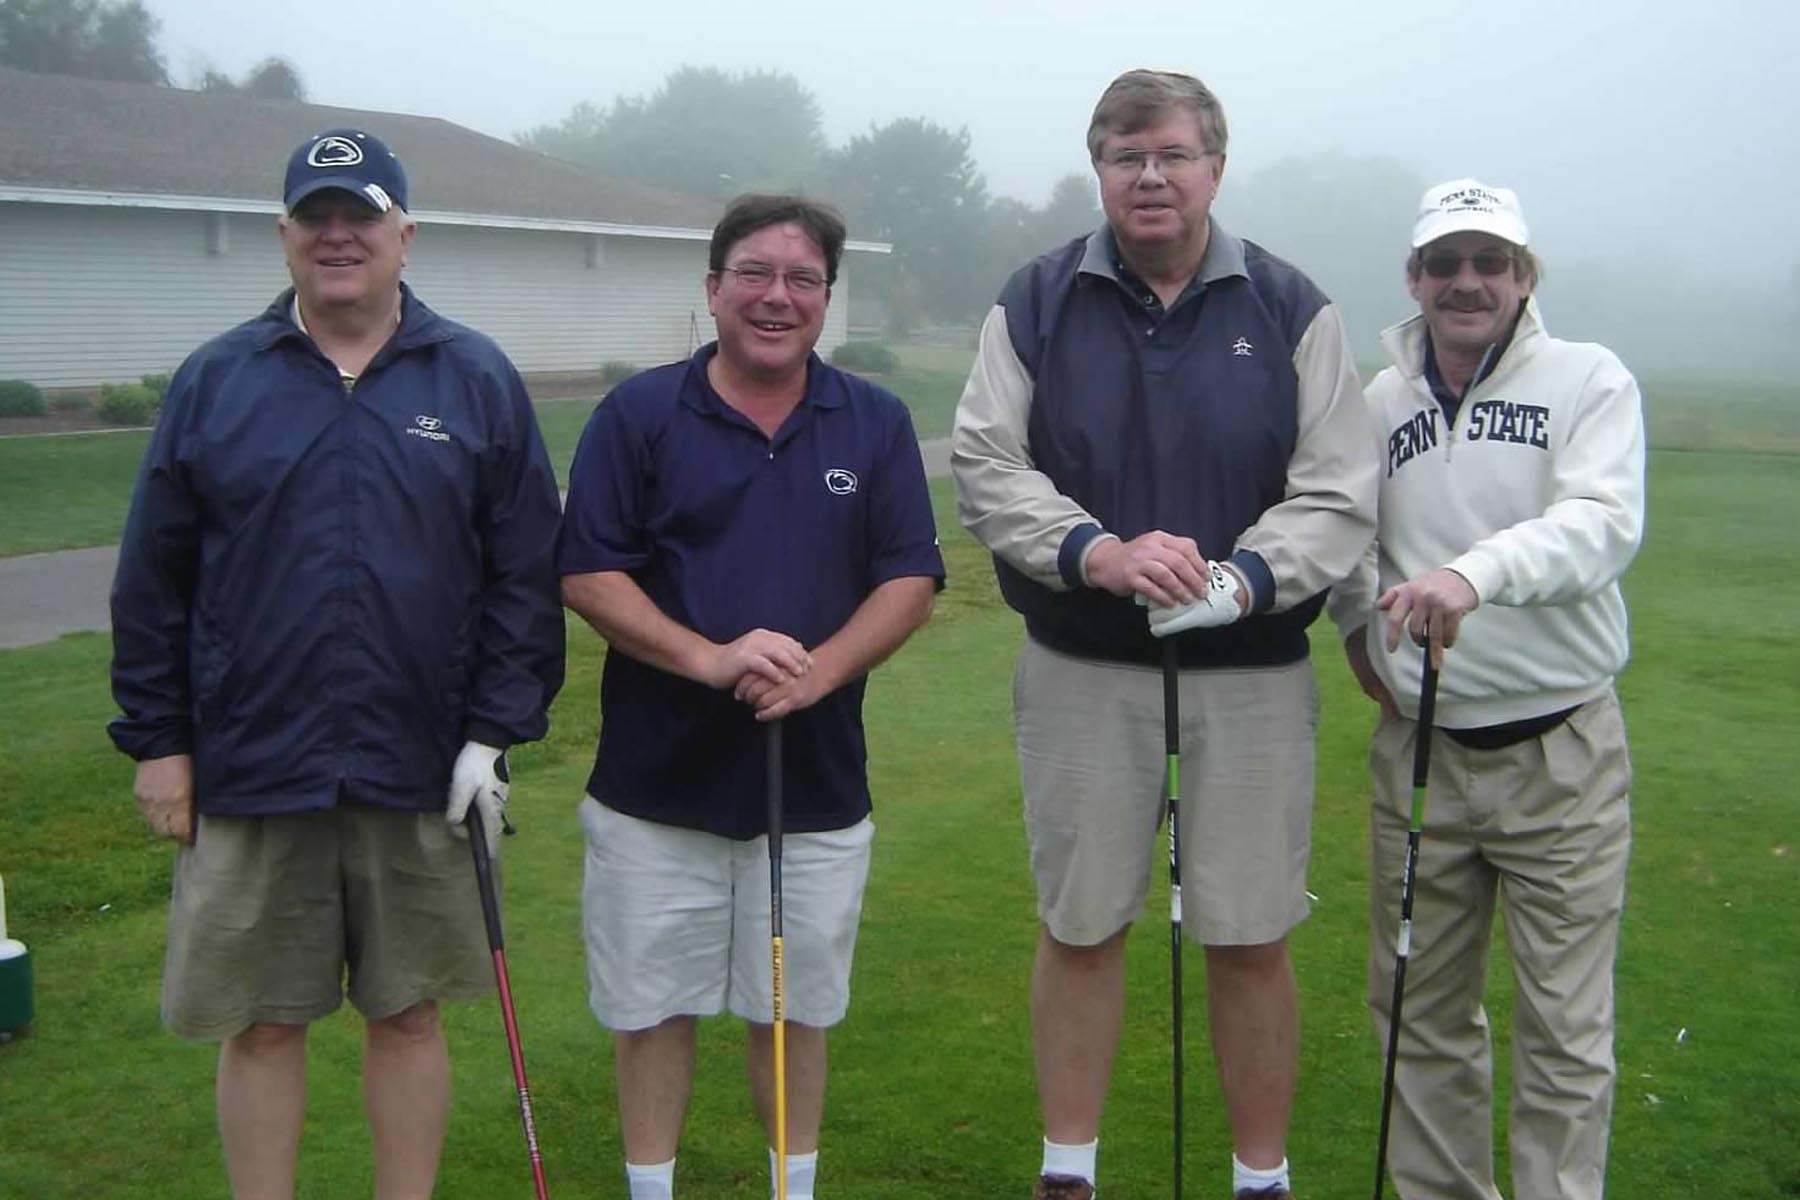  2012 Theta Chi Golf Open
L to R: Mike Perkins, Bill McGill, Paul Cunningham, John Loyle 